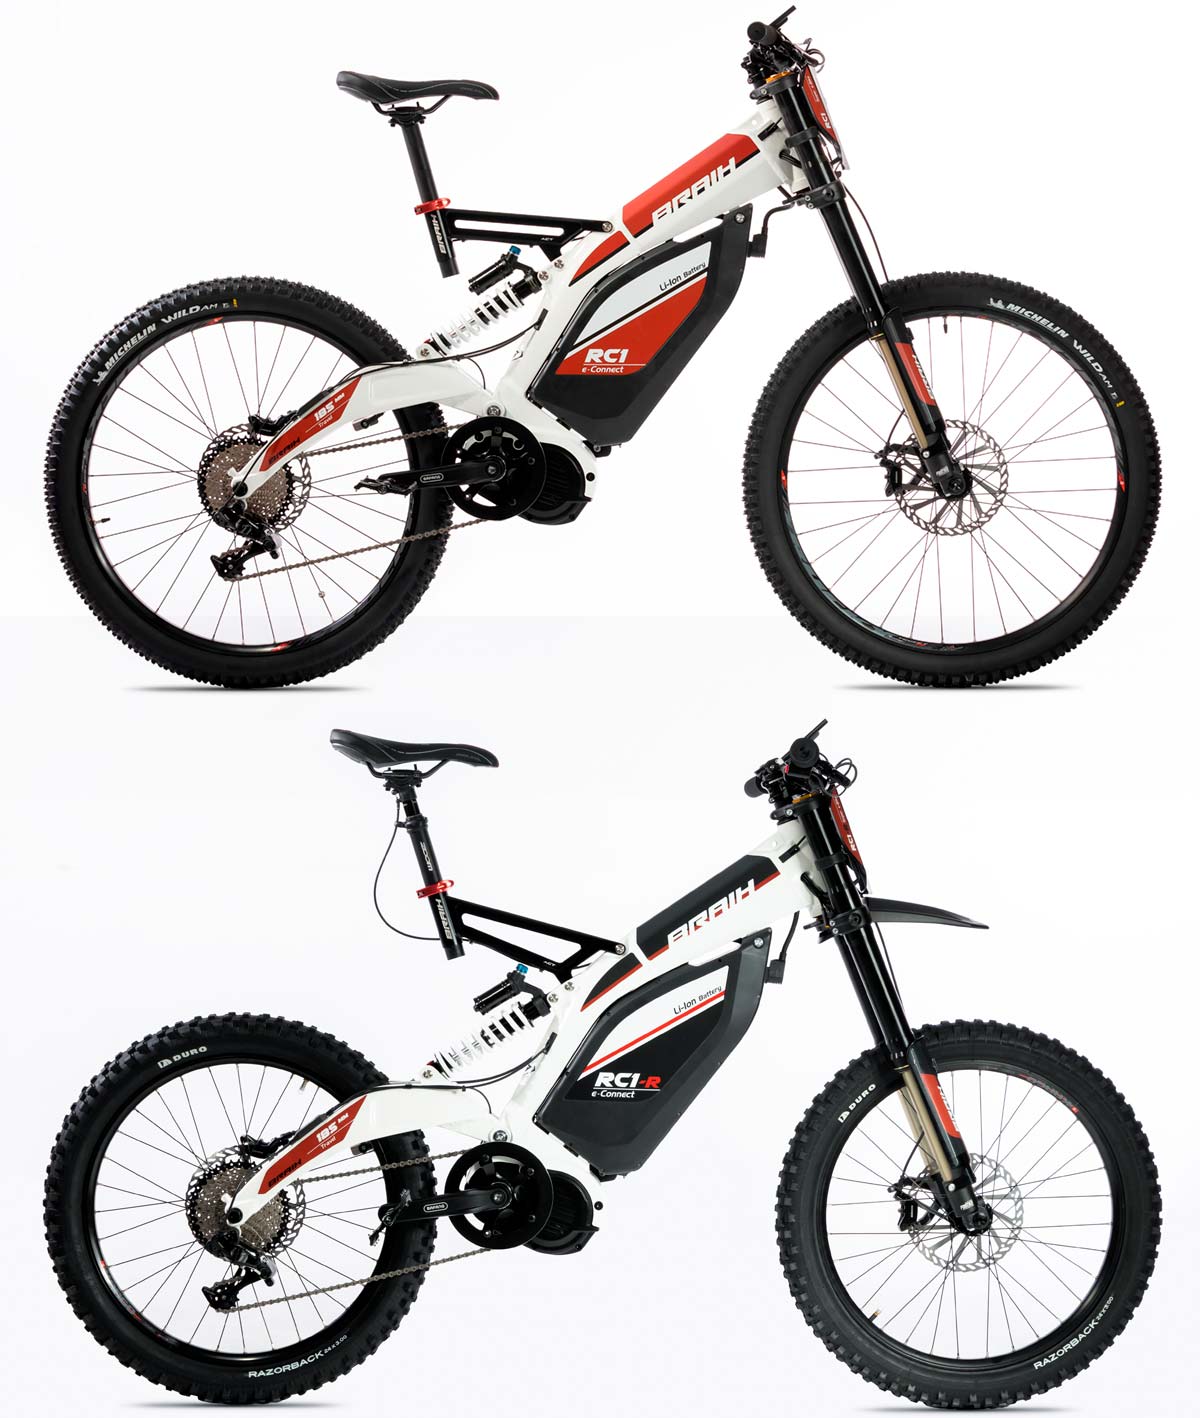 En TodoMountainBike: Braih Bikes presenta la Super e-Bike RC1 250, una e-MTB con una autonomía de hasta 184 kilómetros